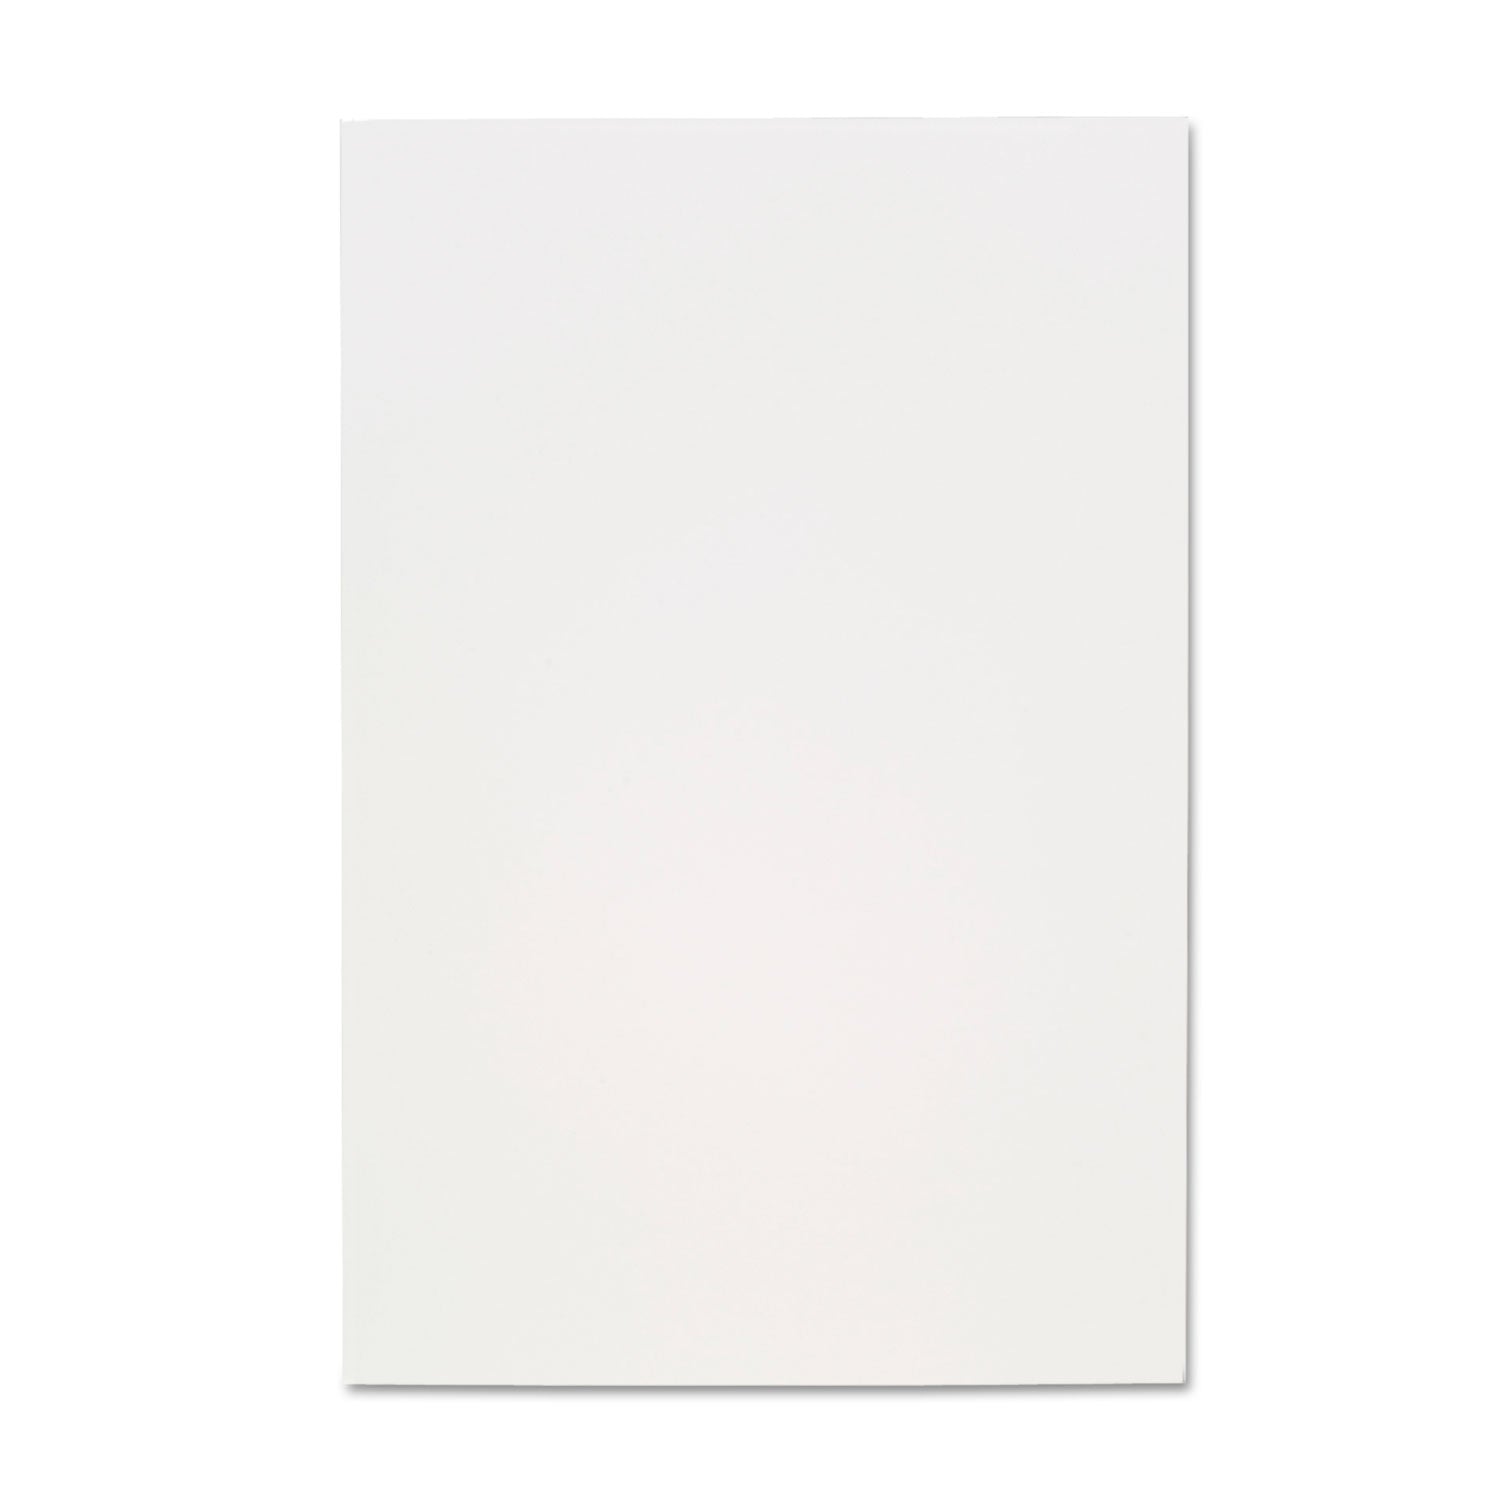 foam-board-polystyrene-20-x-30-white-surface-and-core-10-carton_acj07041109 - 2